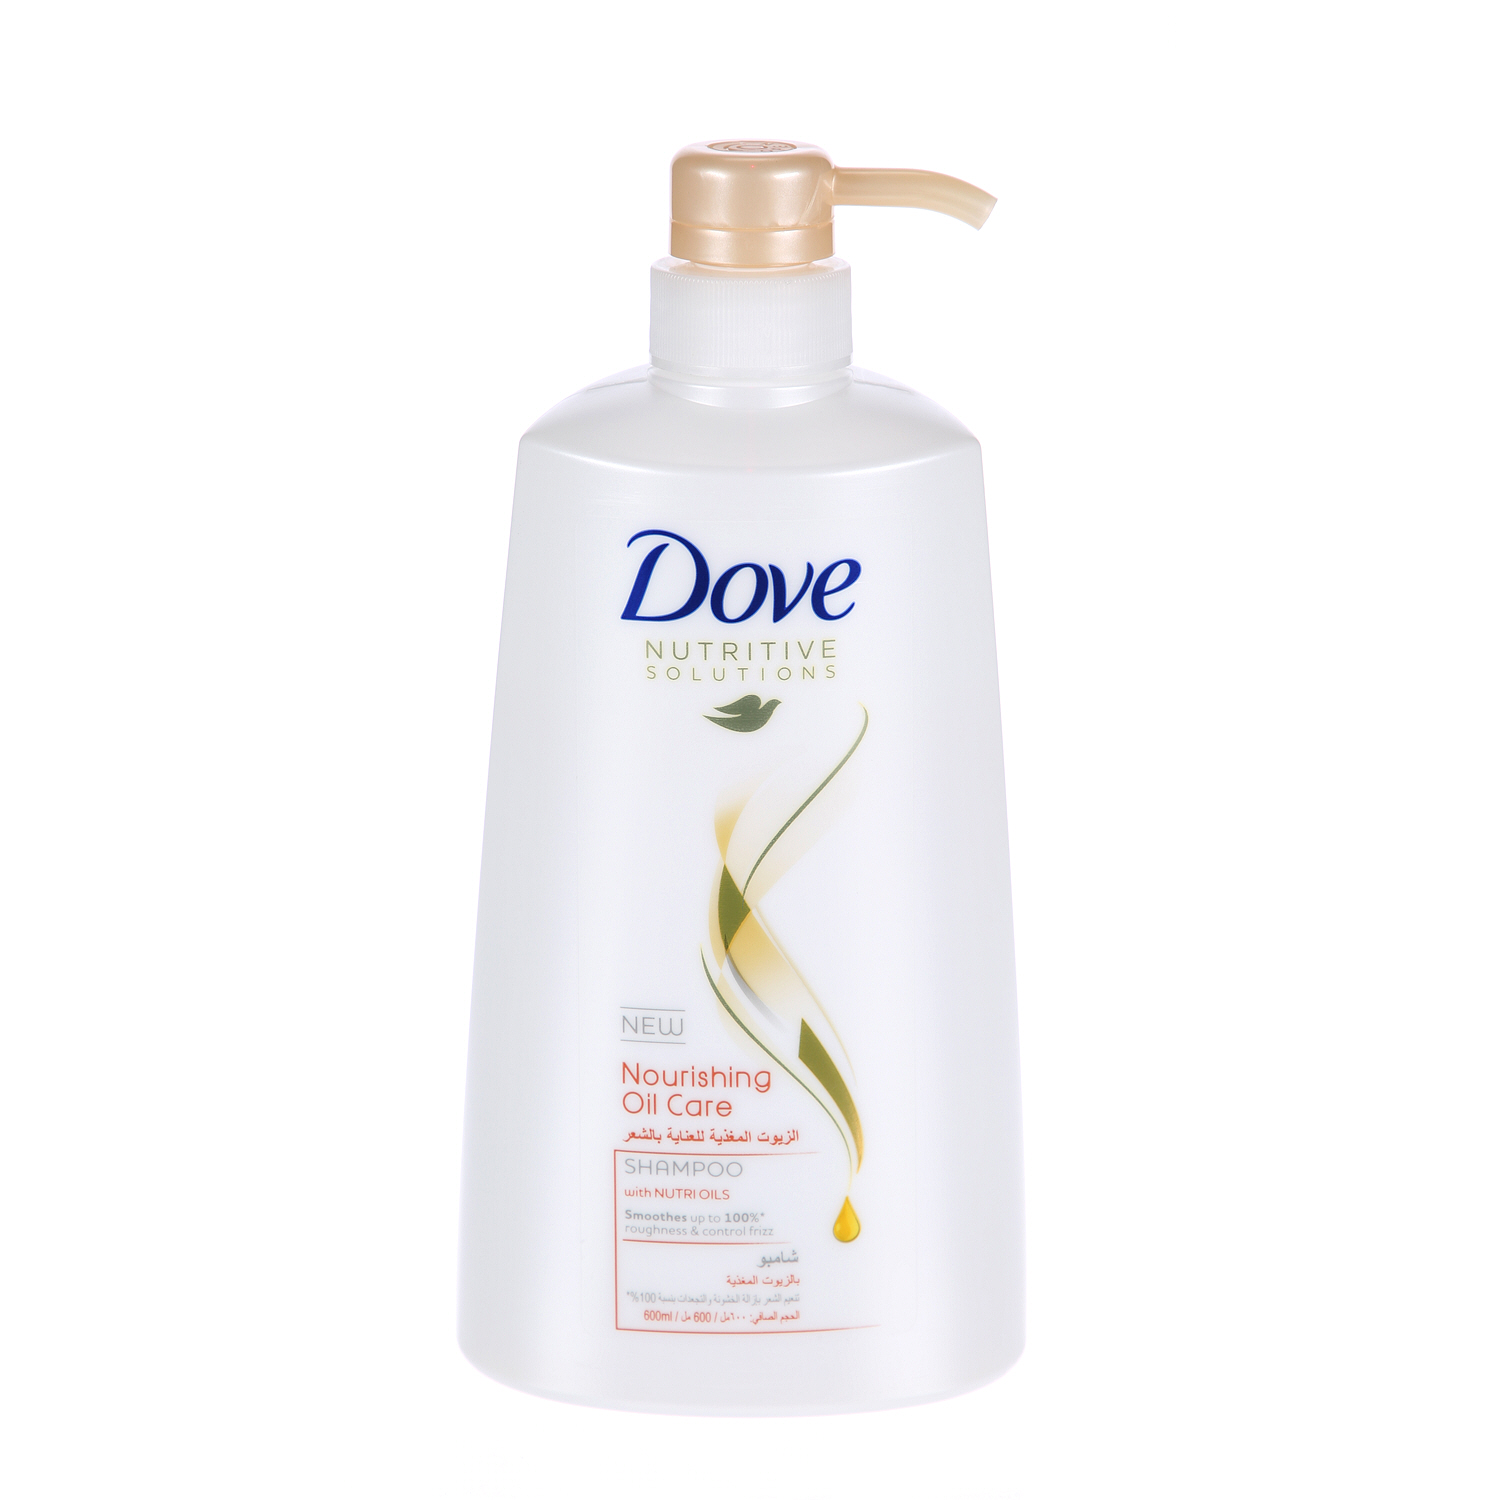 Dove Nourishing Oil Care Shampoo 600 ml